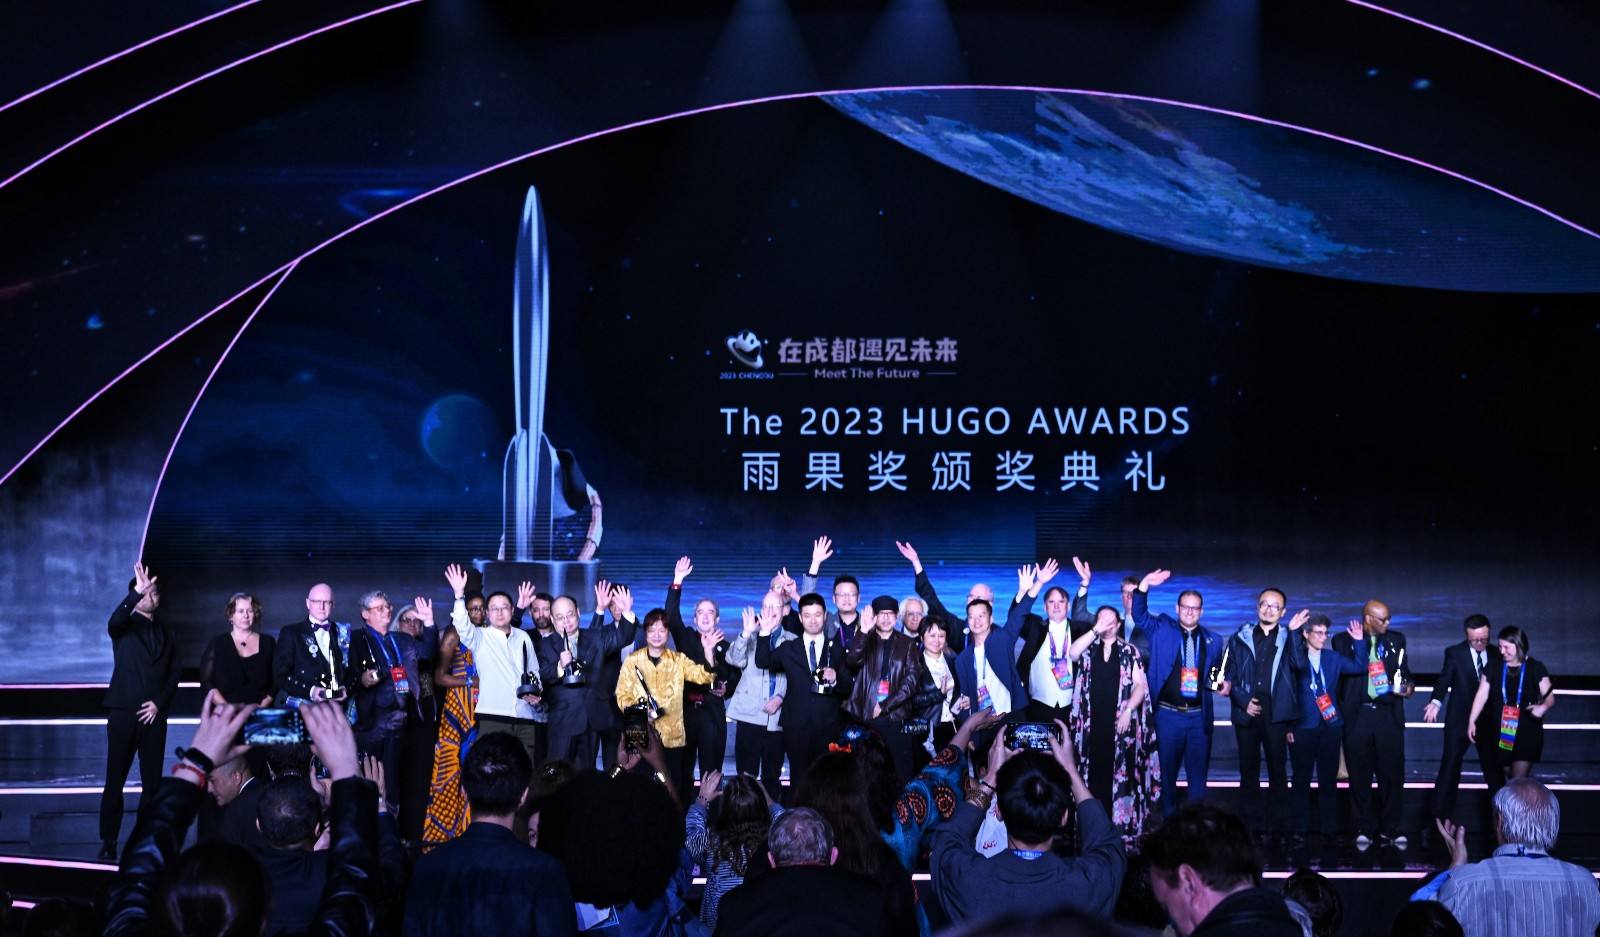 Winners of the 2023 Hugo Awards Announced